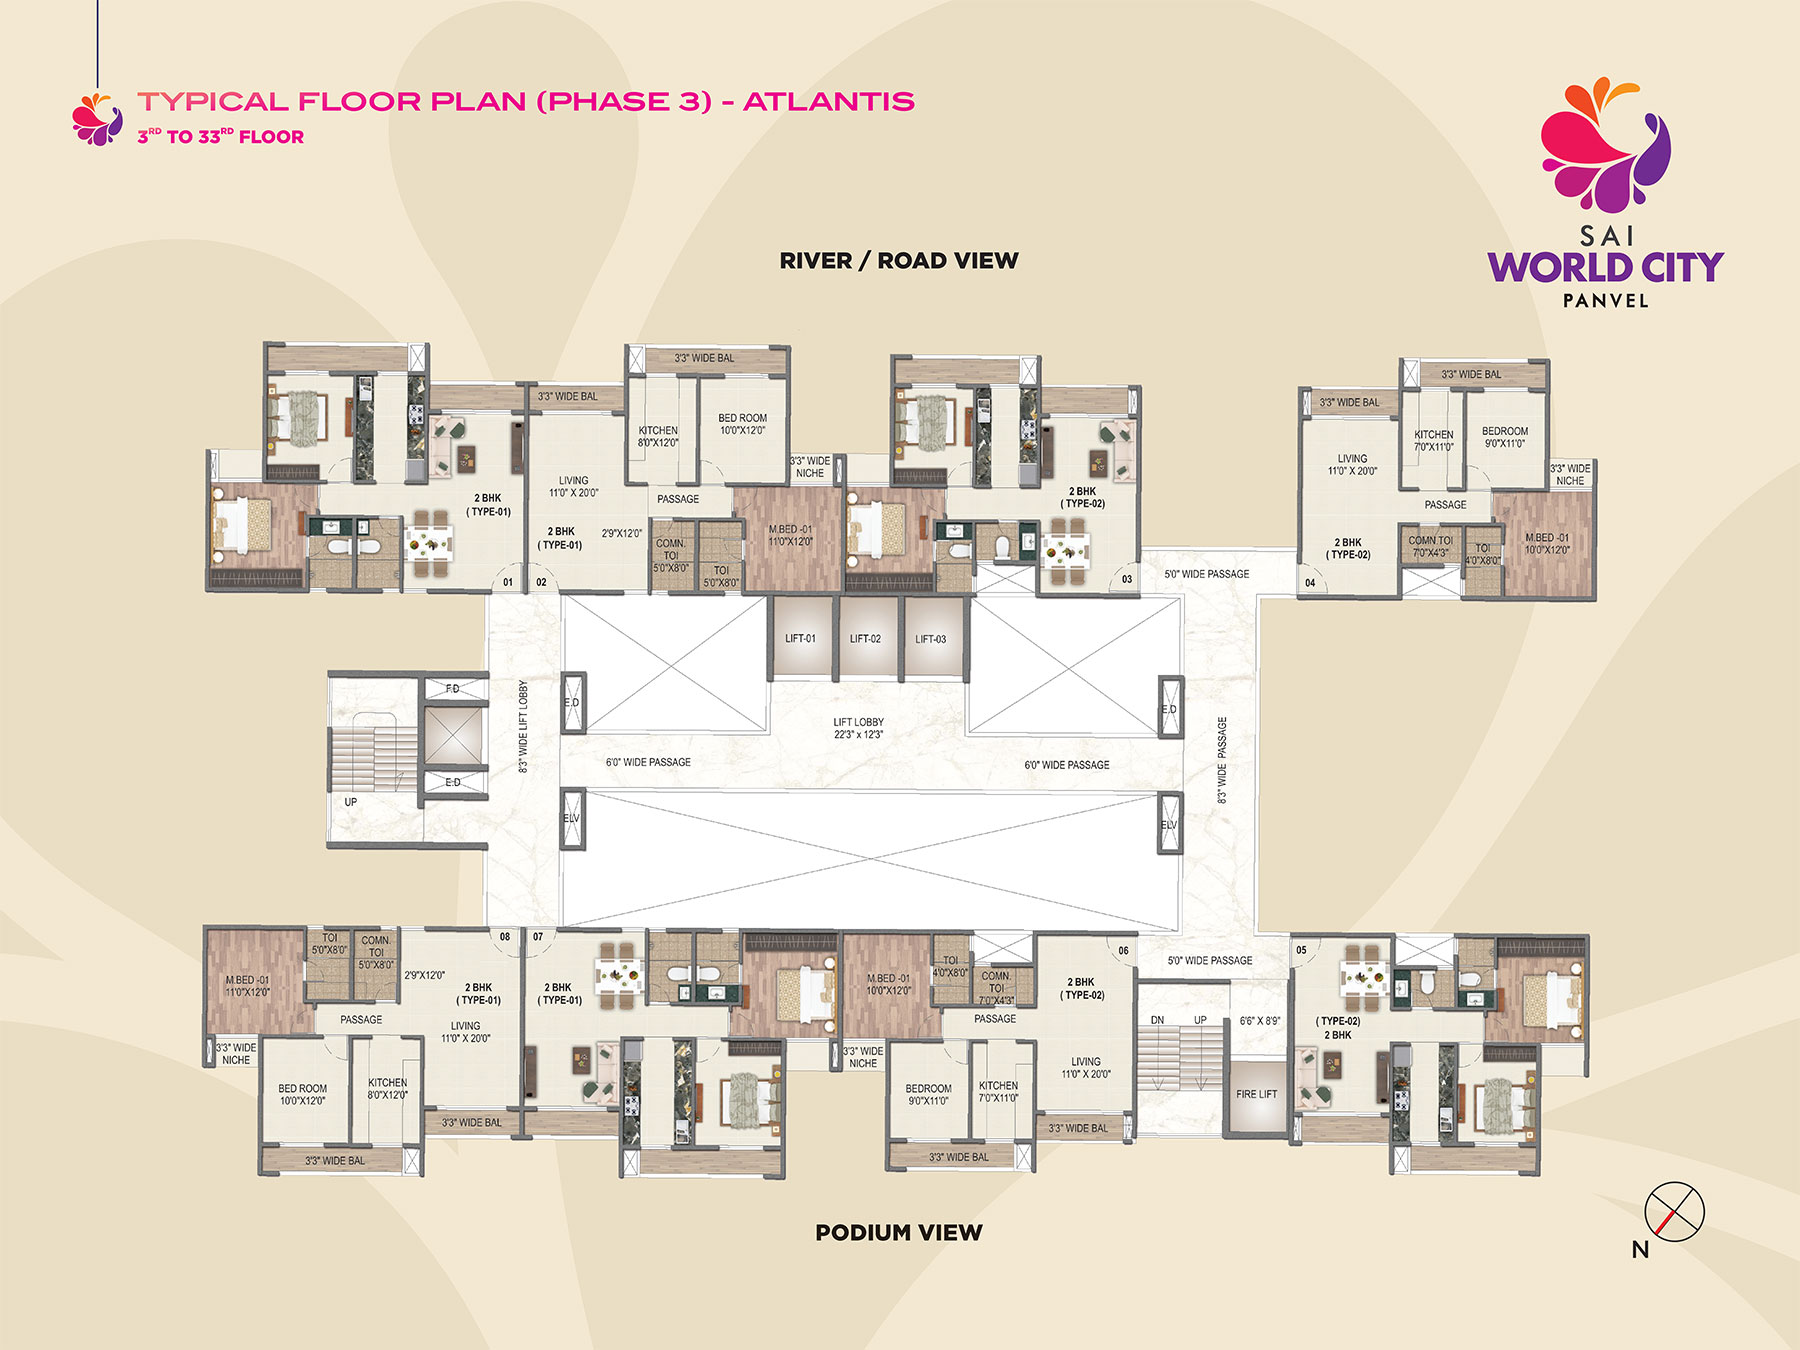 Typical Floor Plan (Phase 3) - ATLANTIS